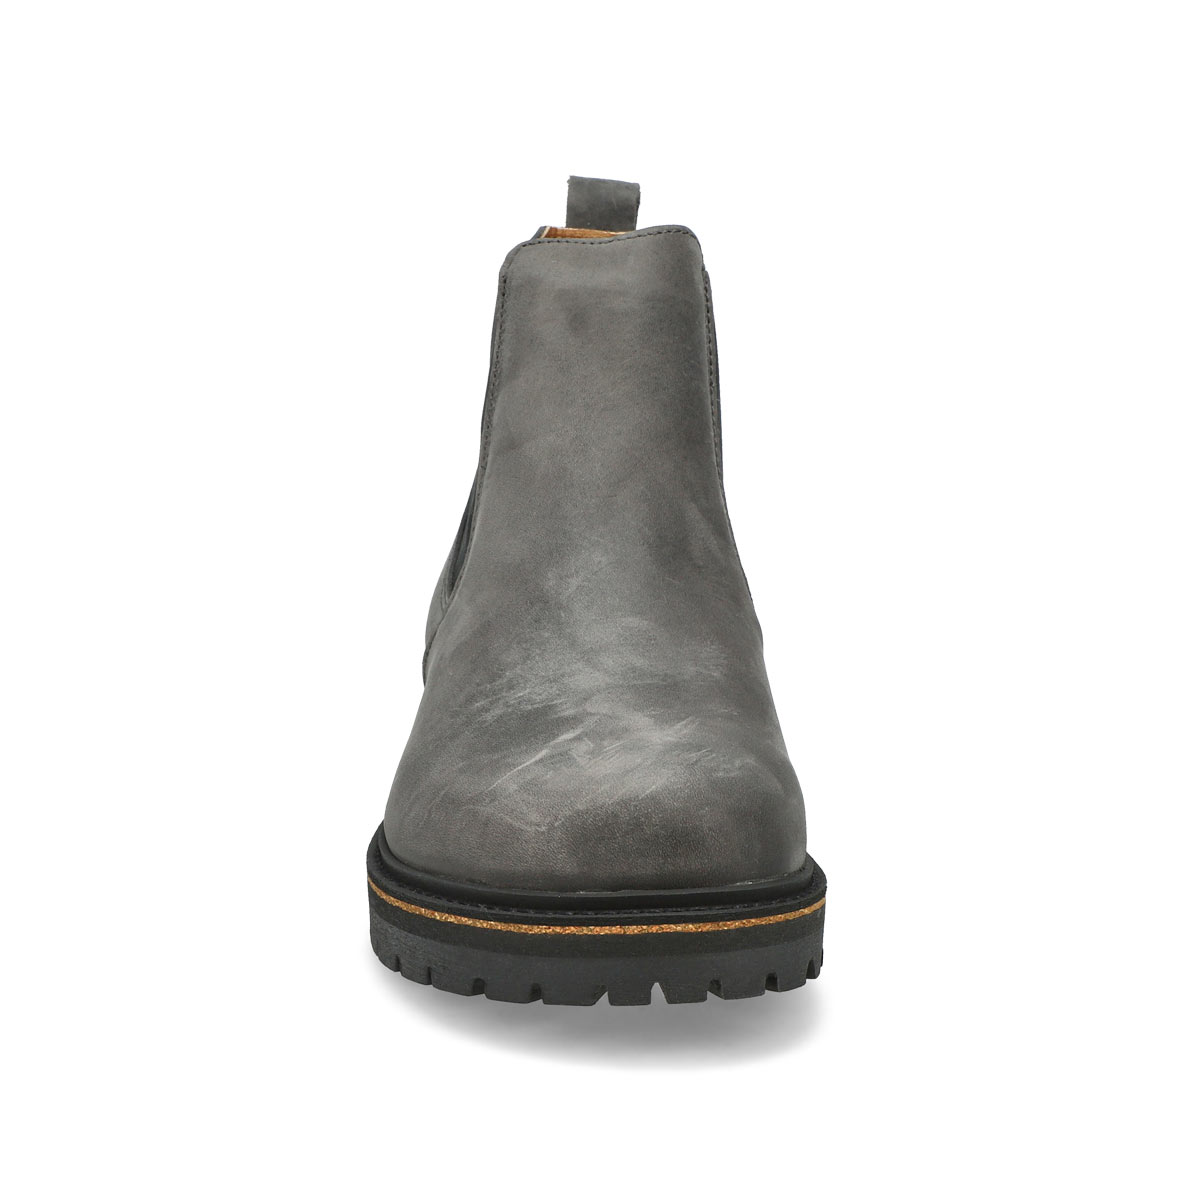 Men's STALON graphite chelsea boots